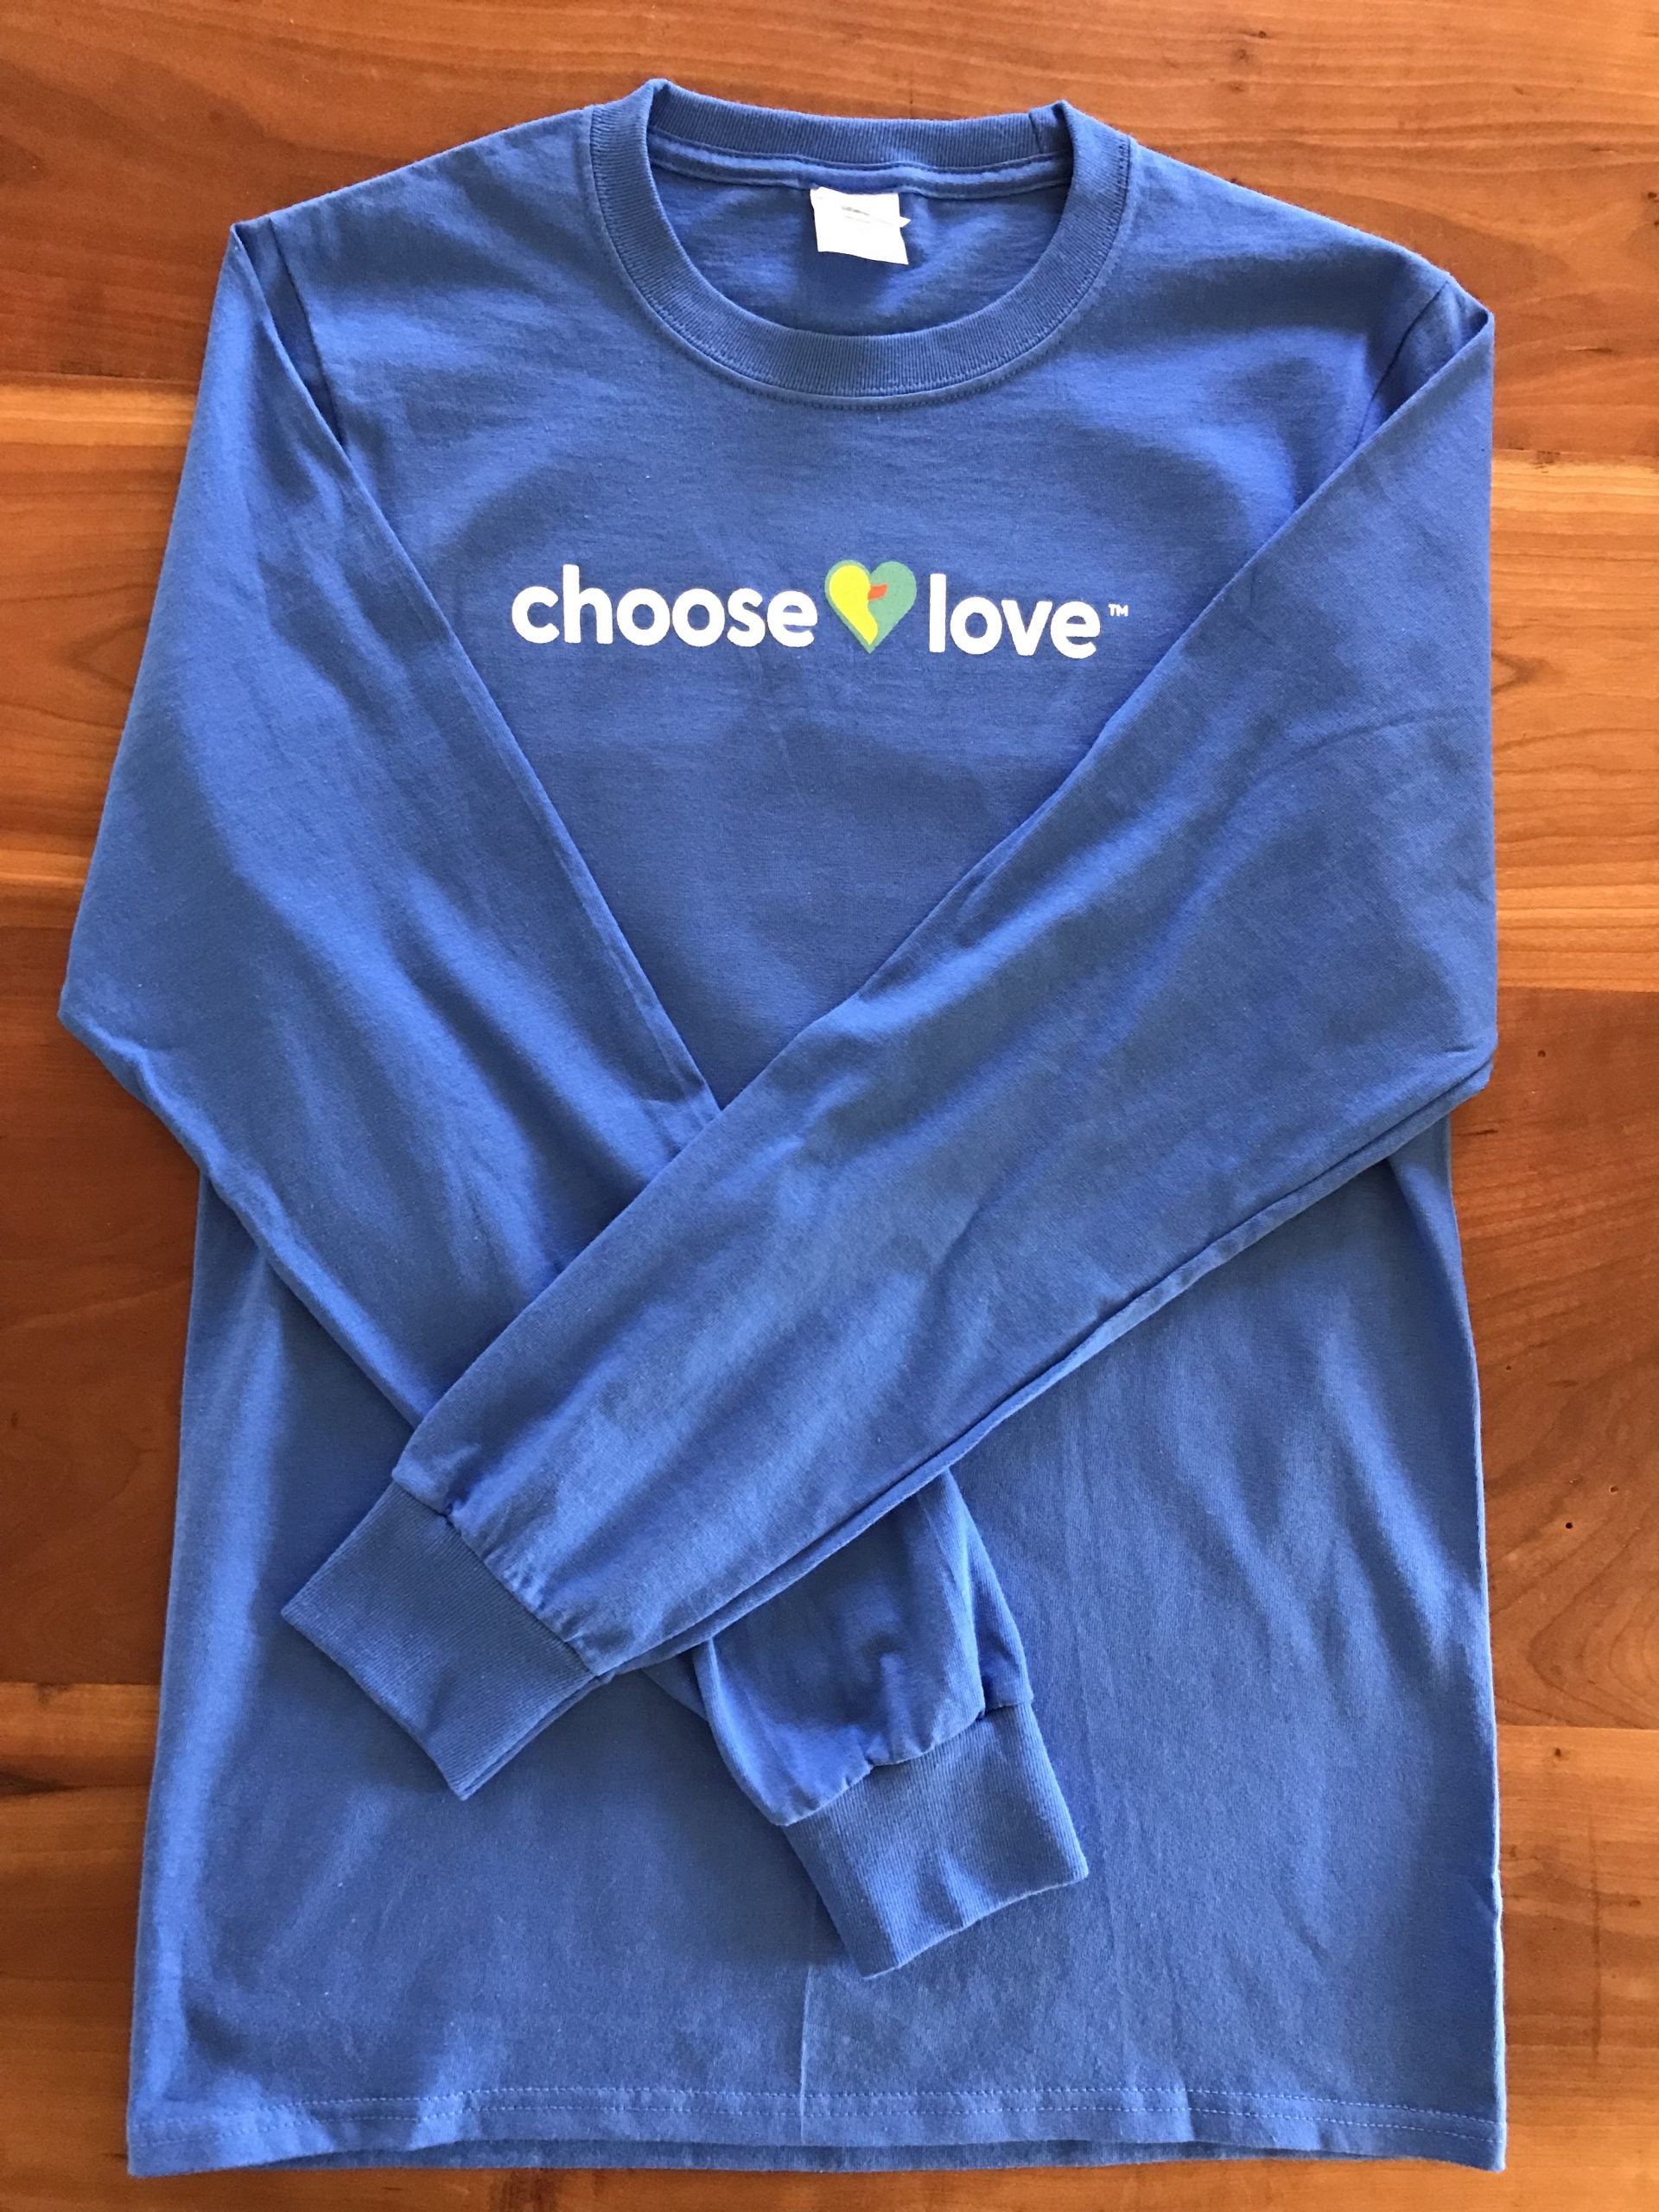 i choose love t shirt  Choose love t shirt, Under armour t shirts, Love t  shirt